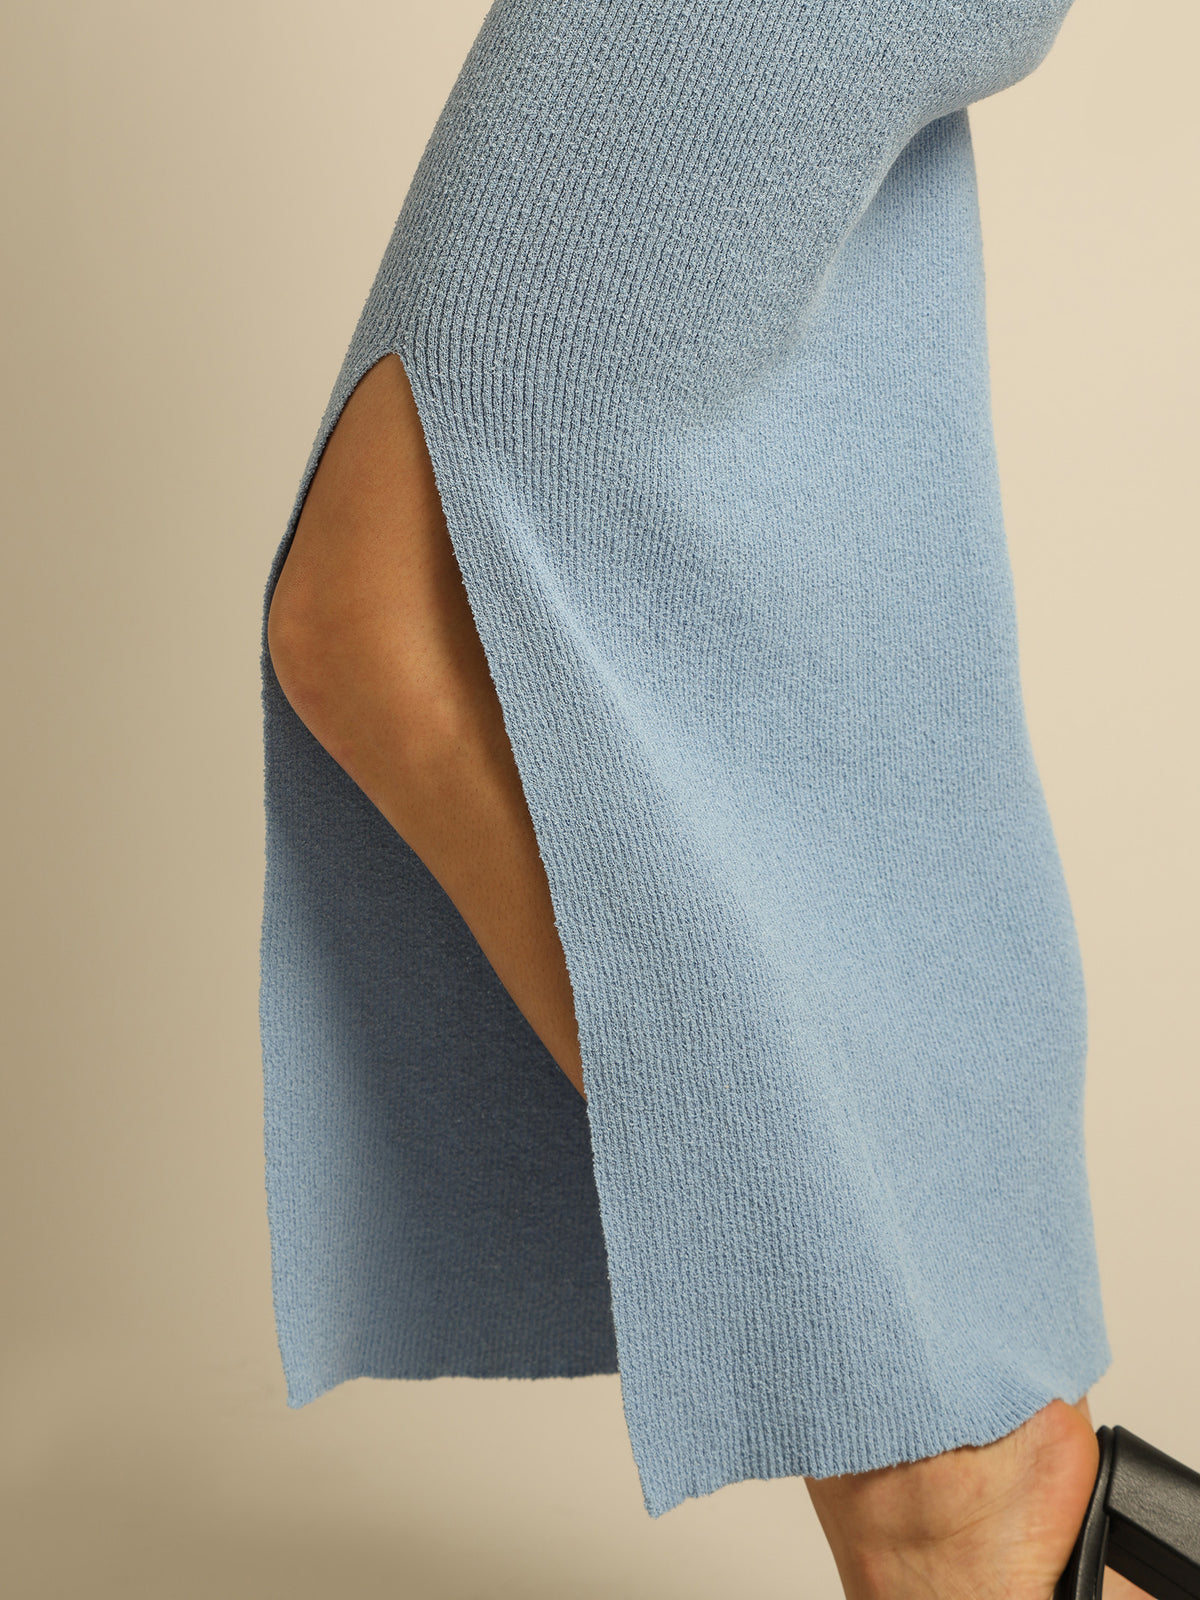 Krista Knit Skirt in Sky Blue